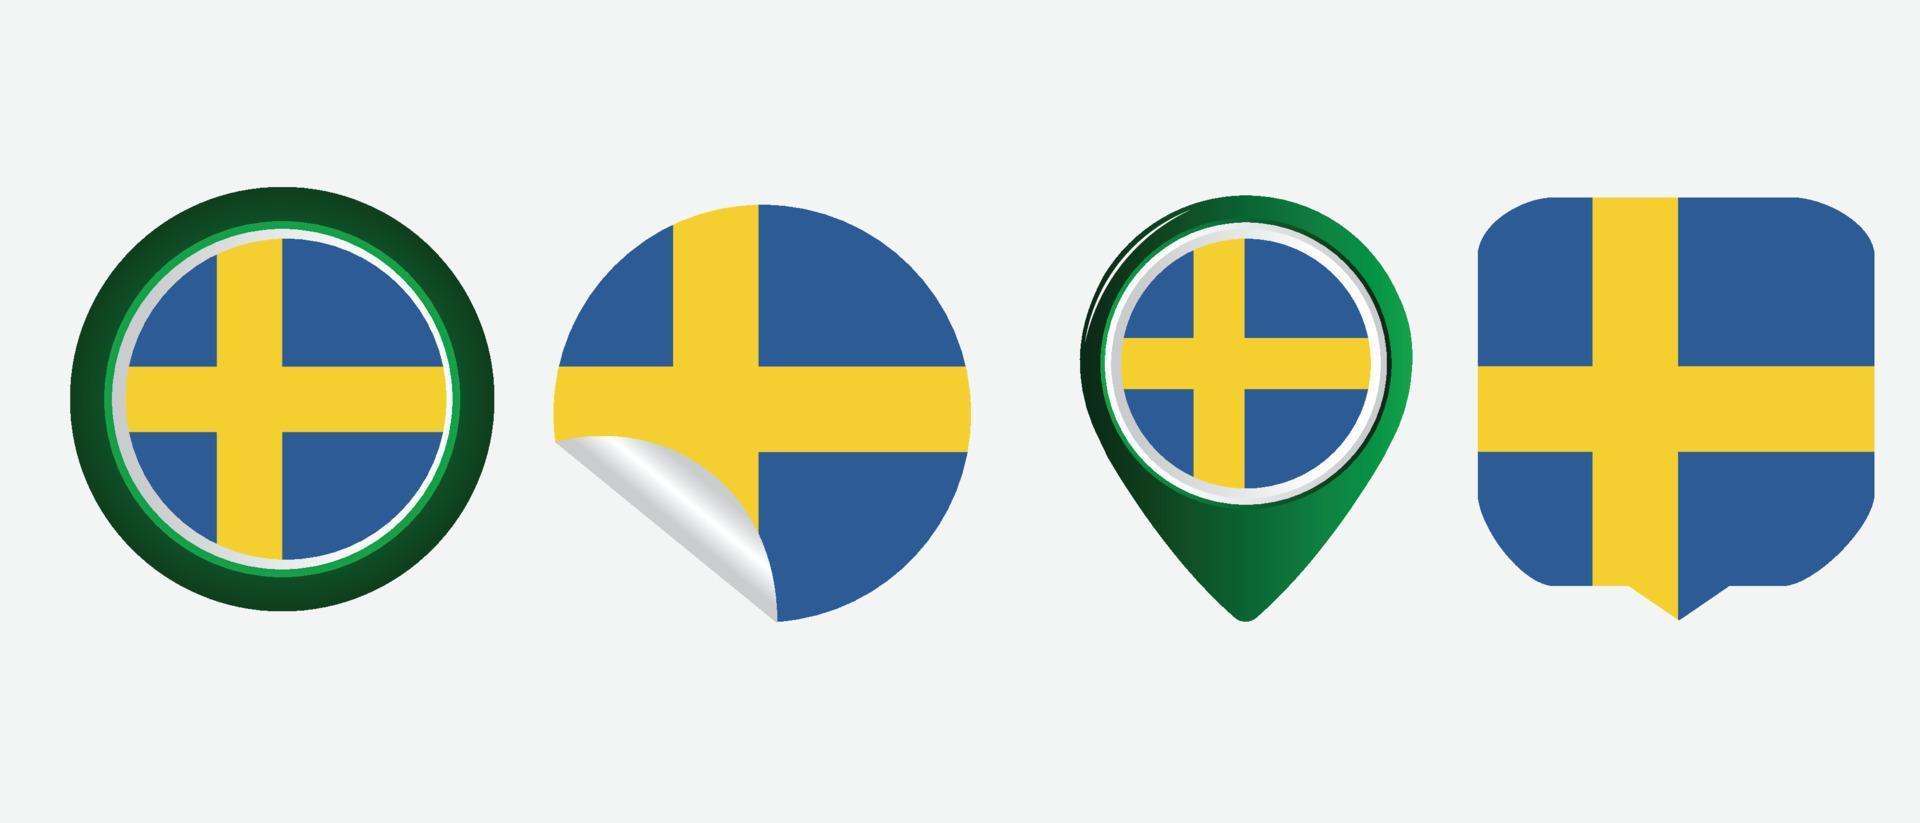 zweedse vlag. platte pictogram symbool vectorillustratie vector